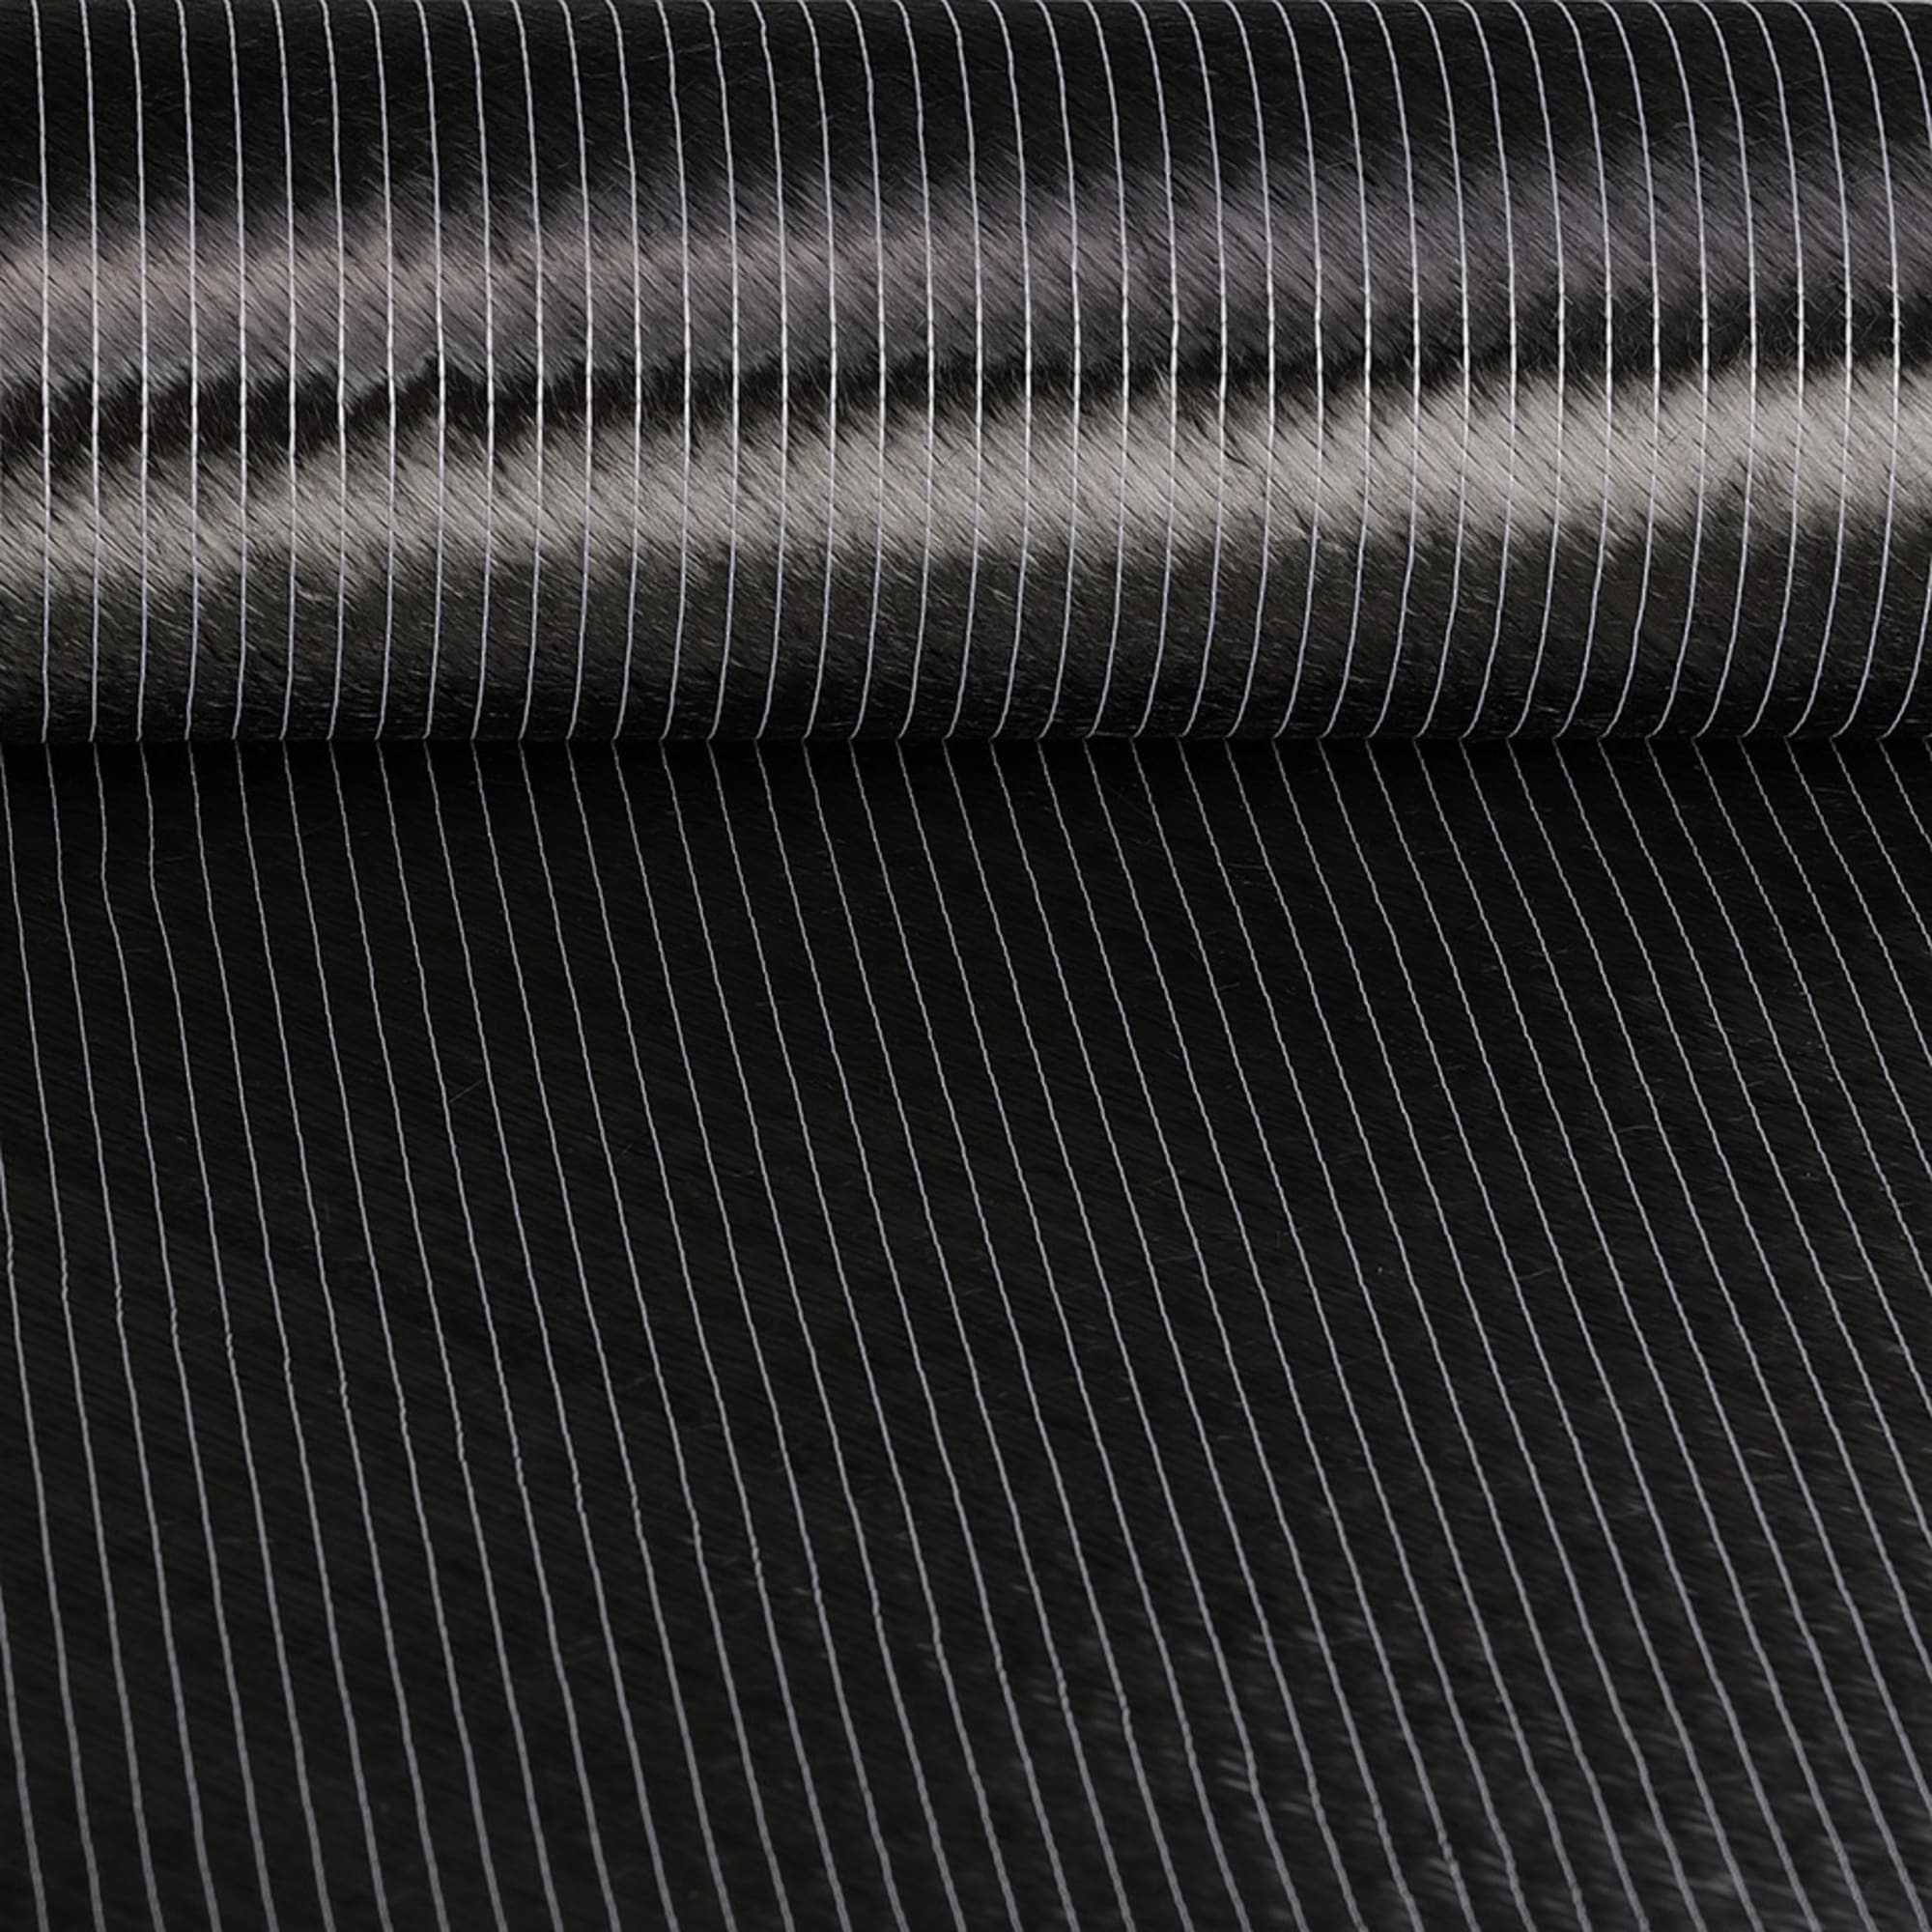 SIGRATEX® Carbon non-crimp fabric 610 g/m² (biaxial) 127 cm, image 2